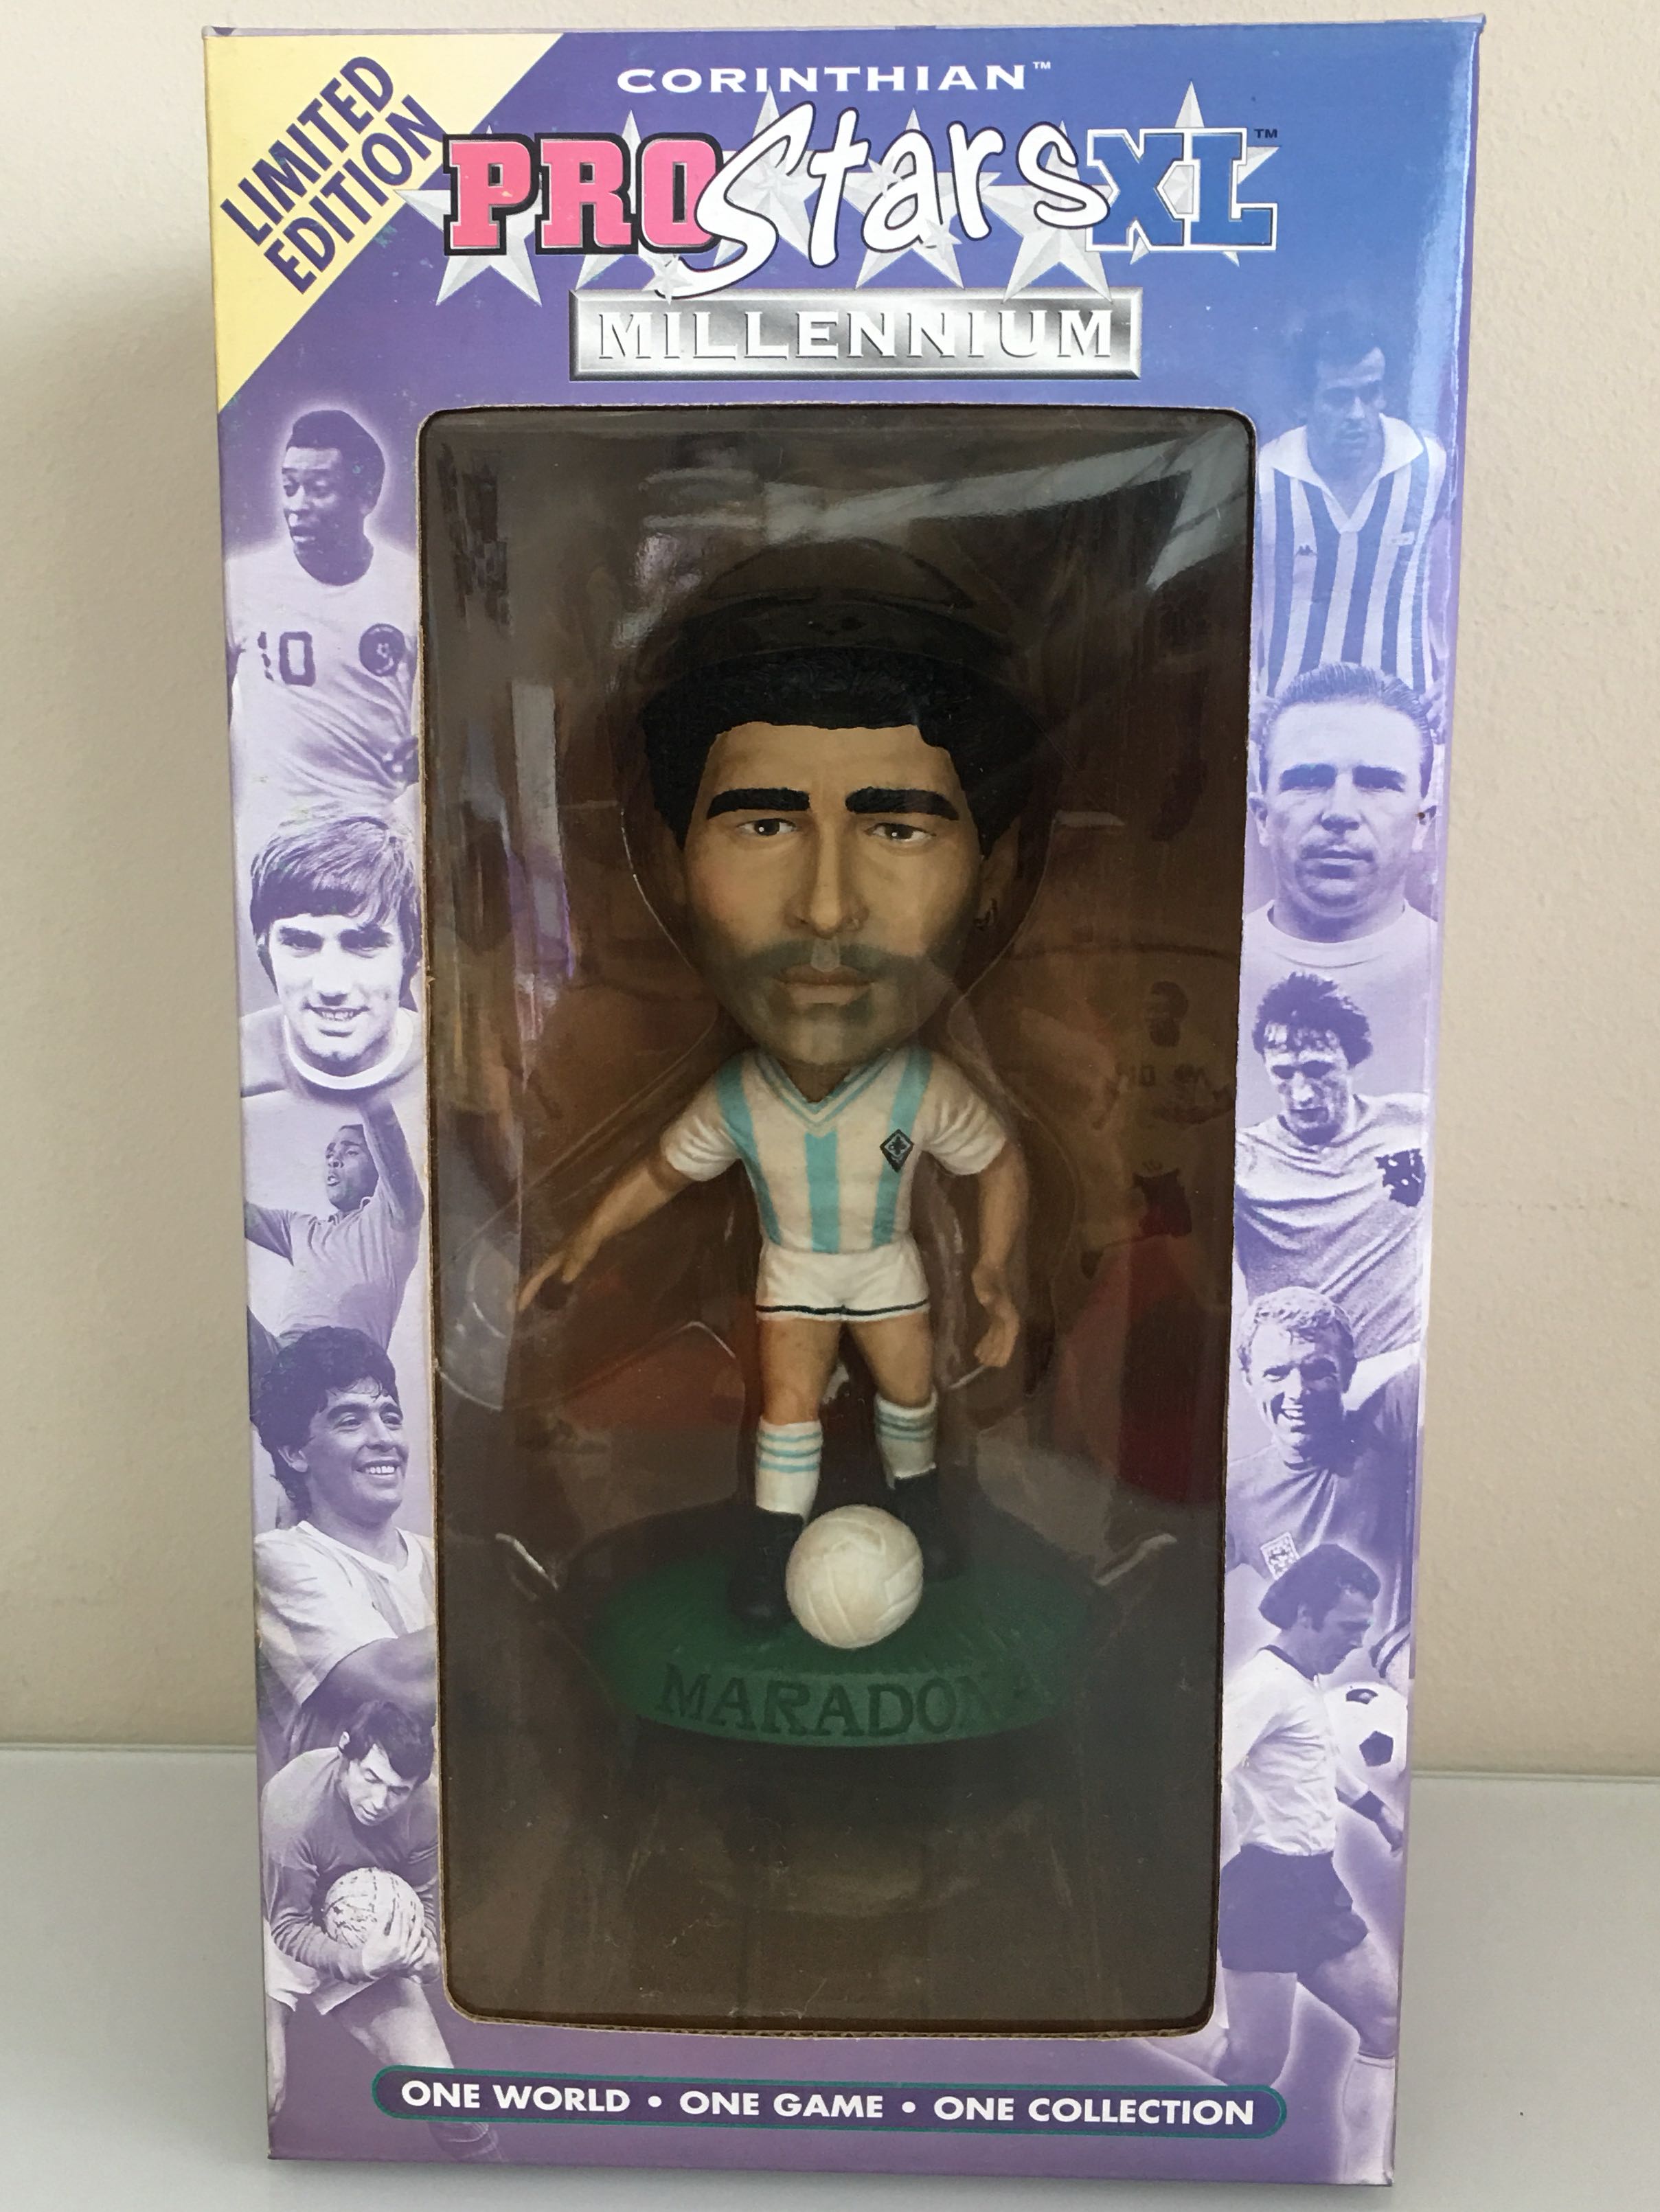 Corinthian Prostars - Maradona Argentina XL Millennium Box